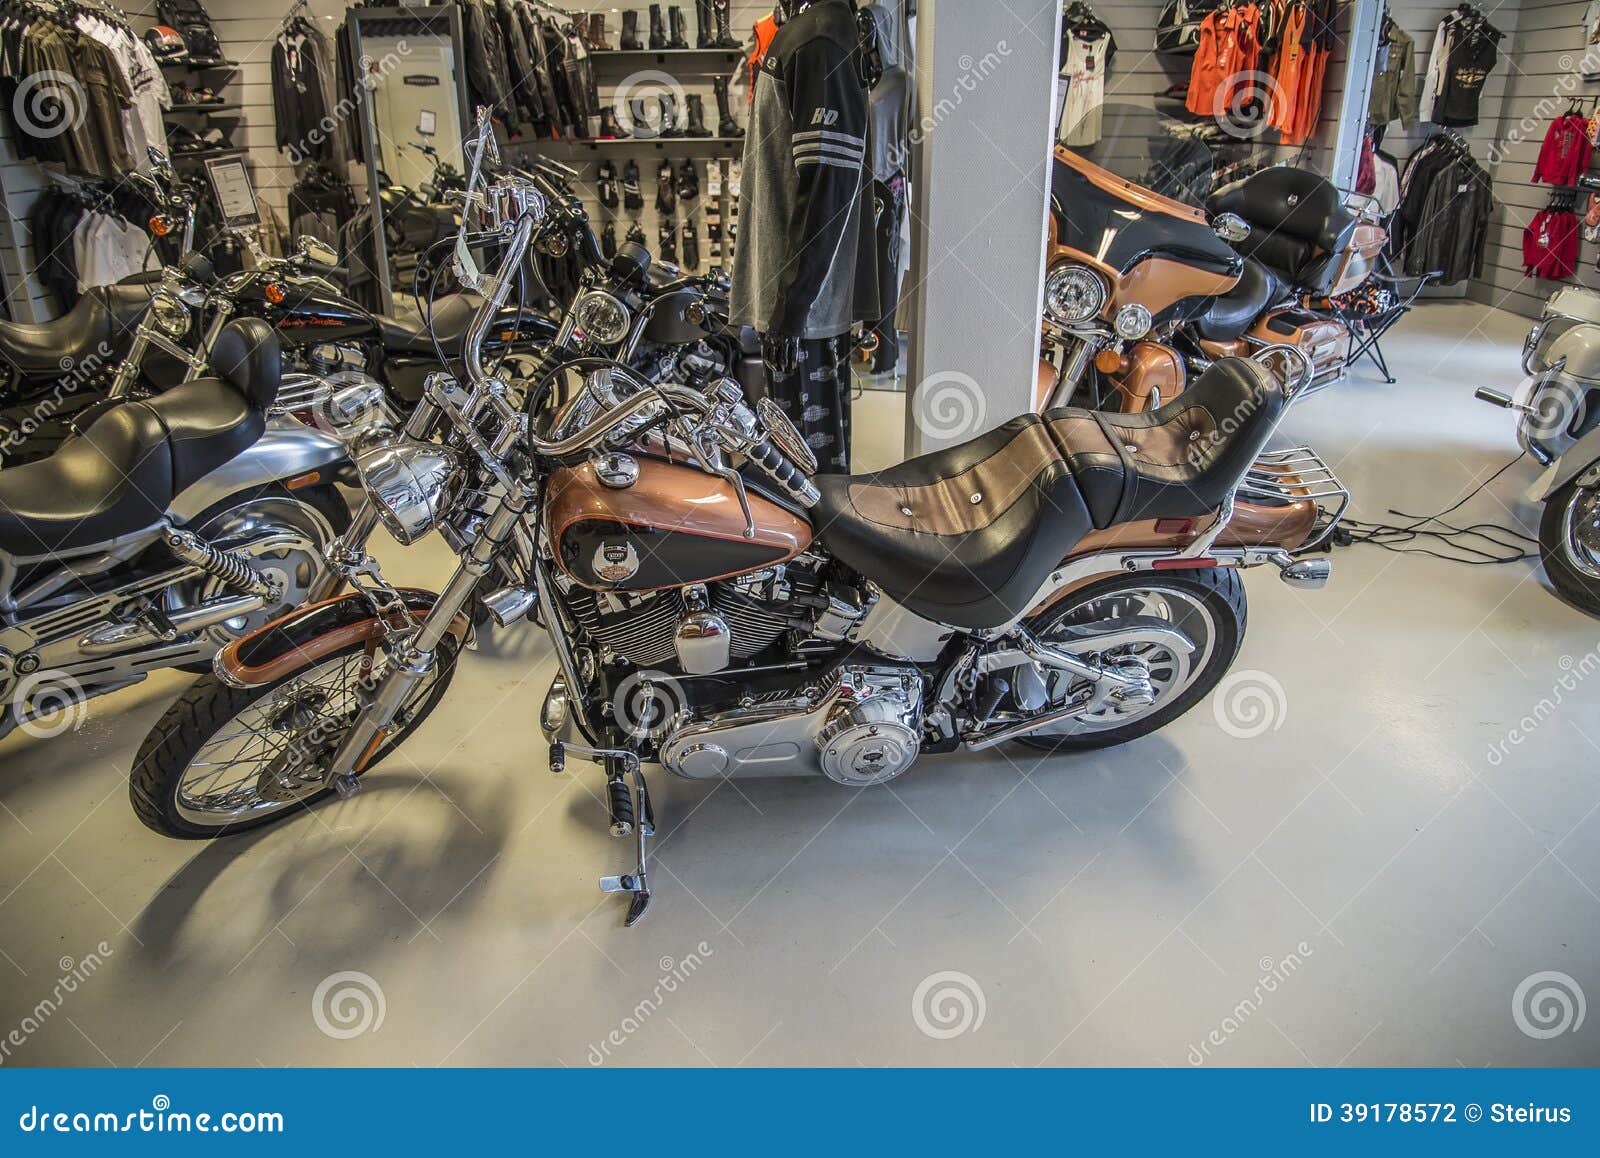 2008 Harley Davidson Softail Custom Editorial Photography Image Of Detail Machine 39178572